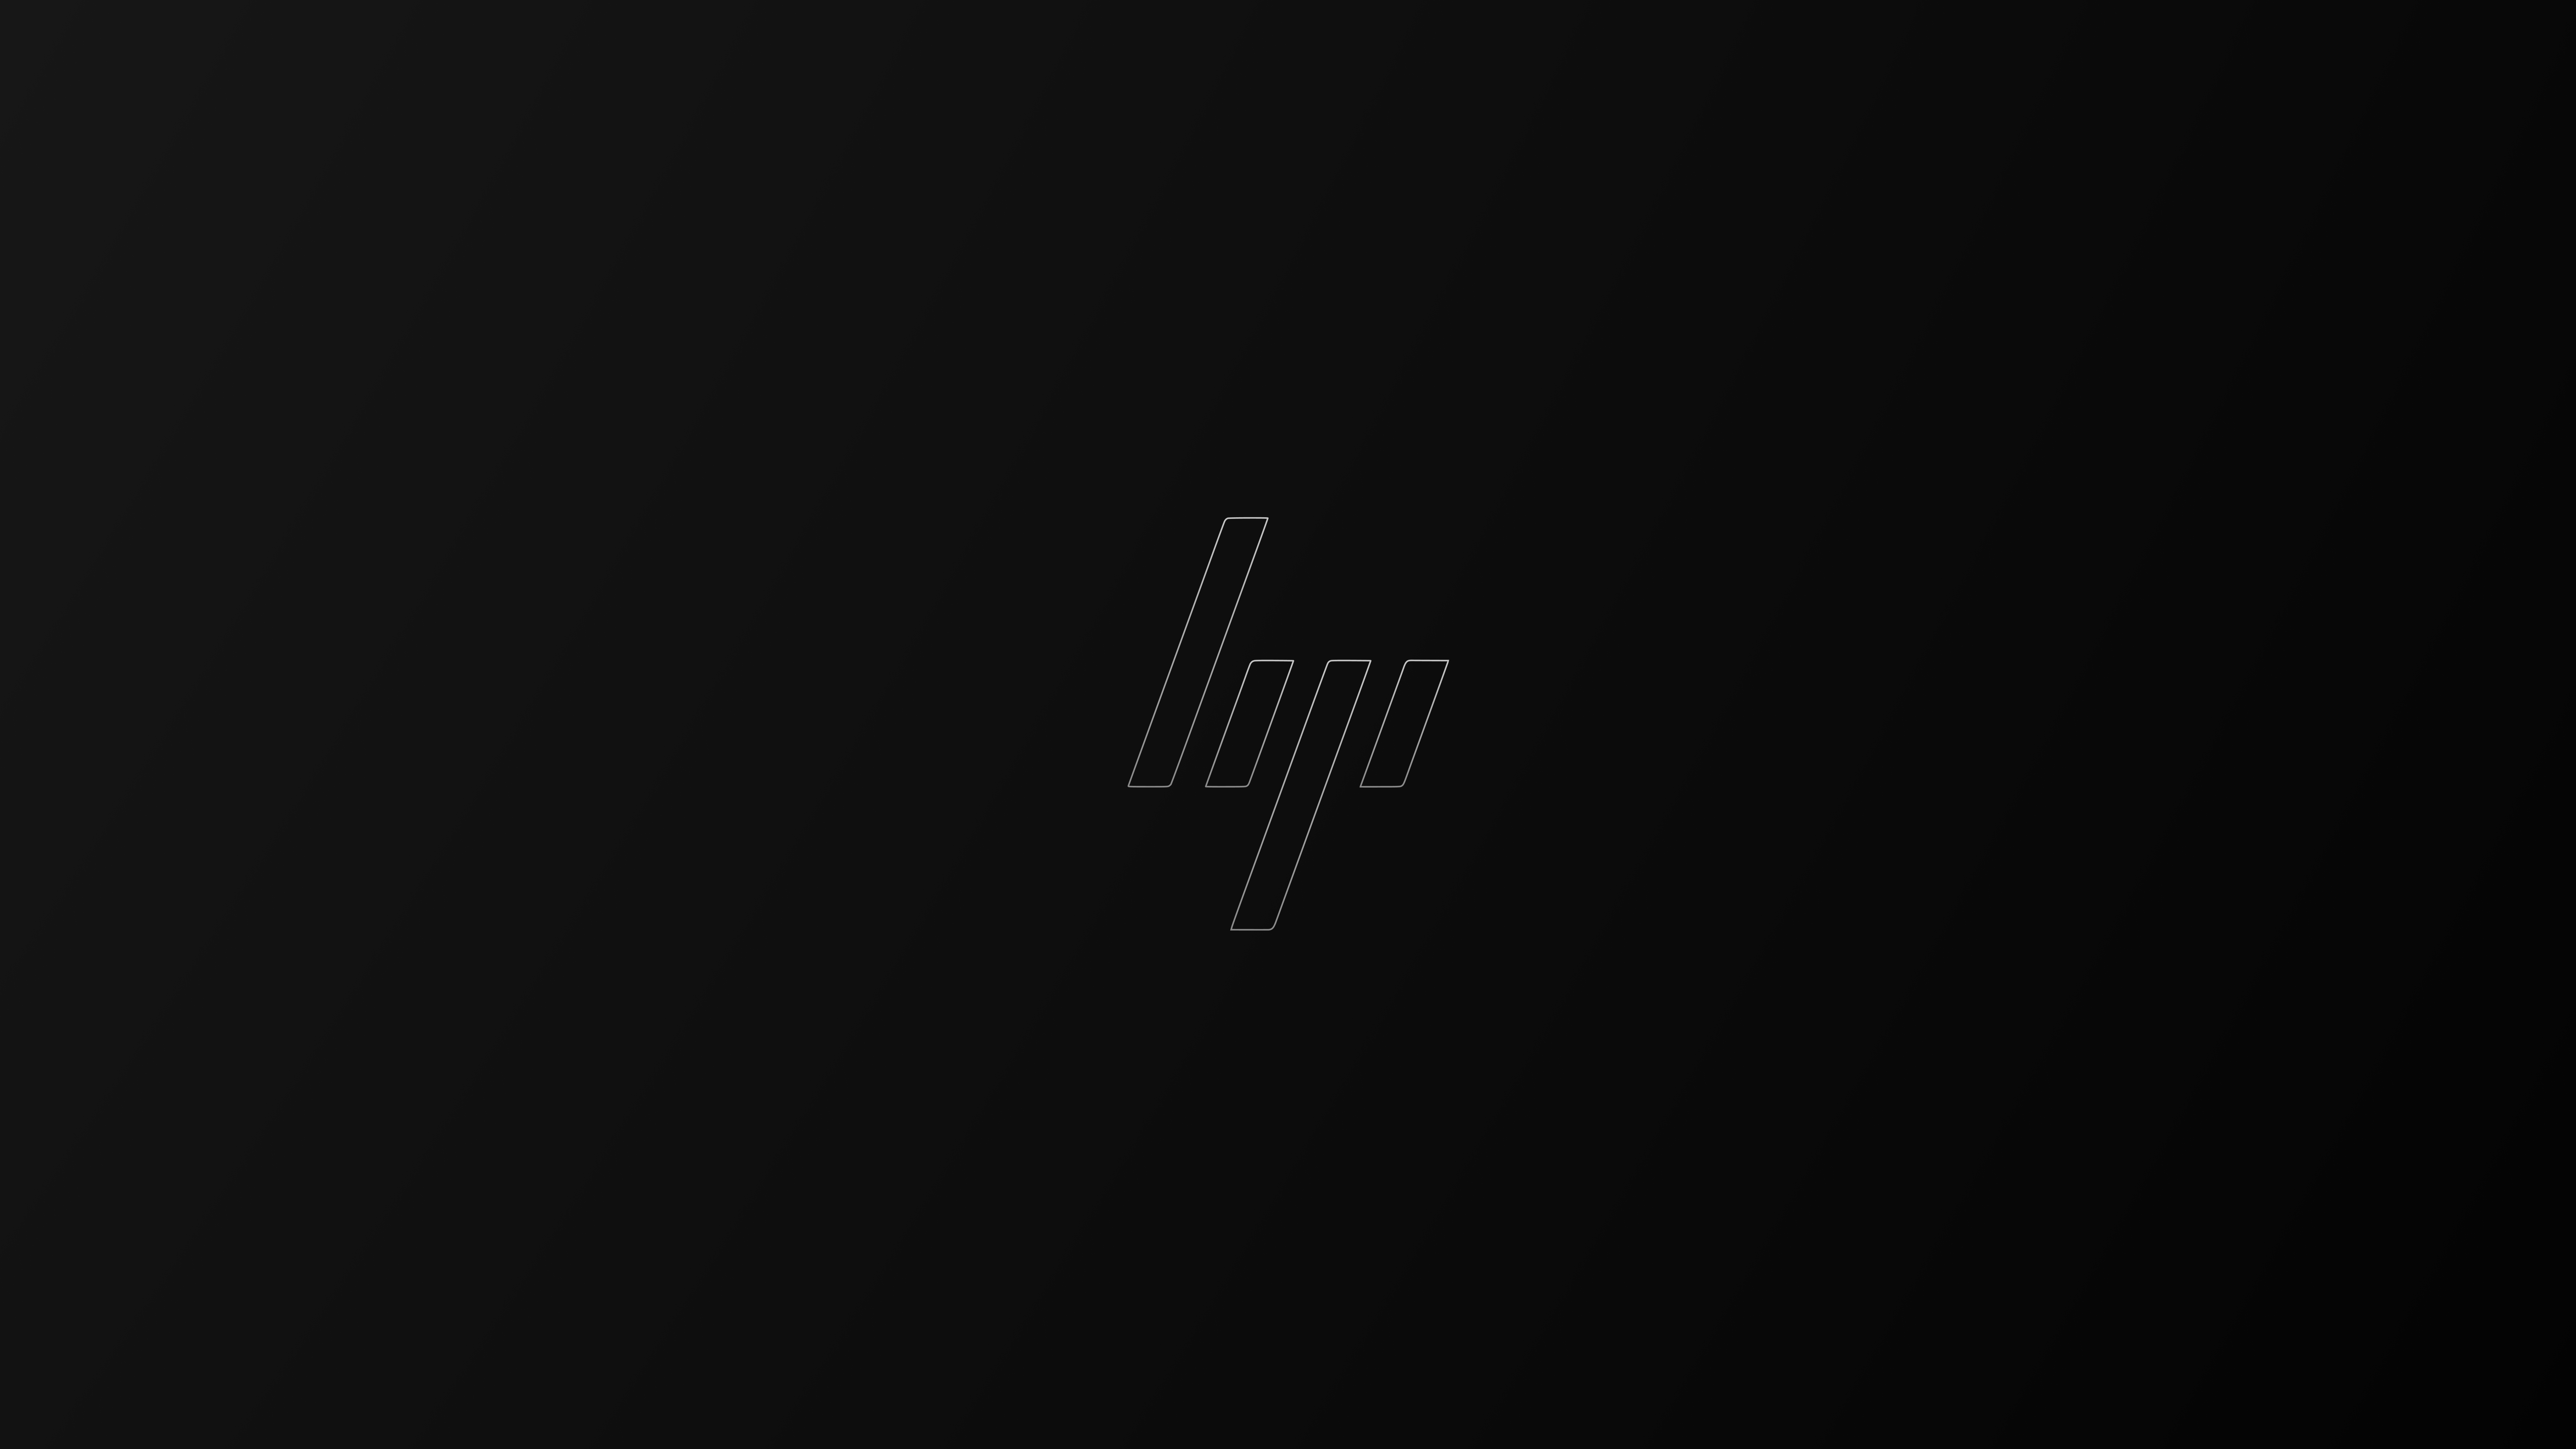 General 7680x4320 black background logo brand simple background digital art minimalism Hewlett Packard